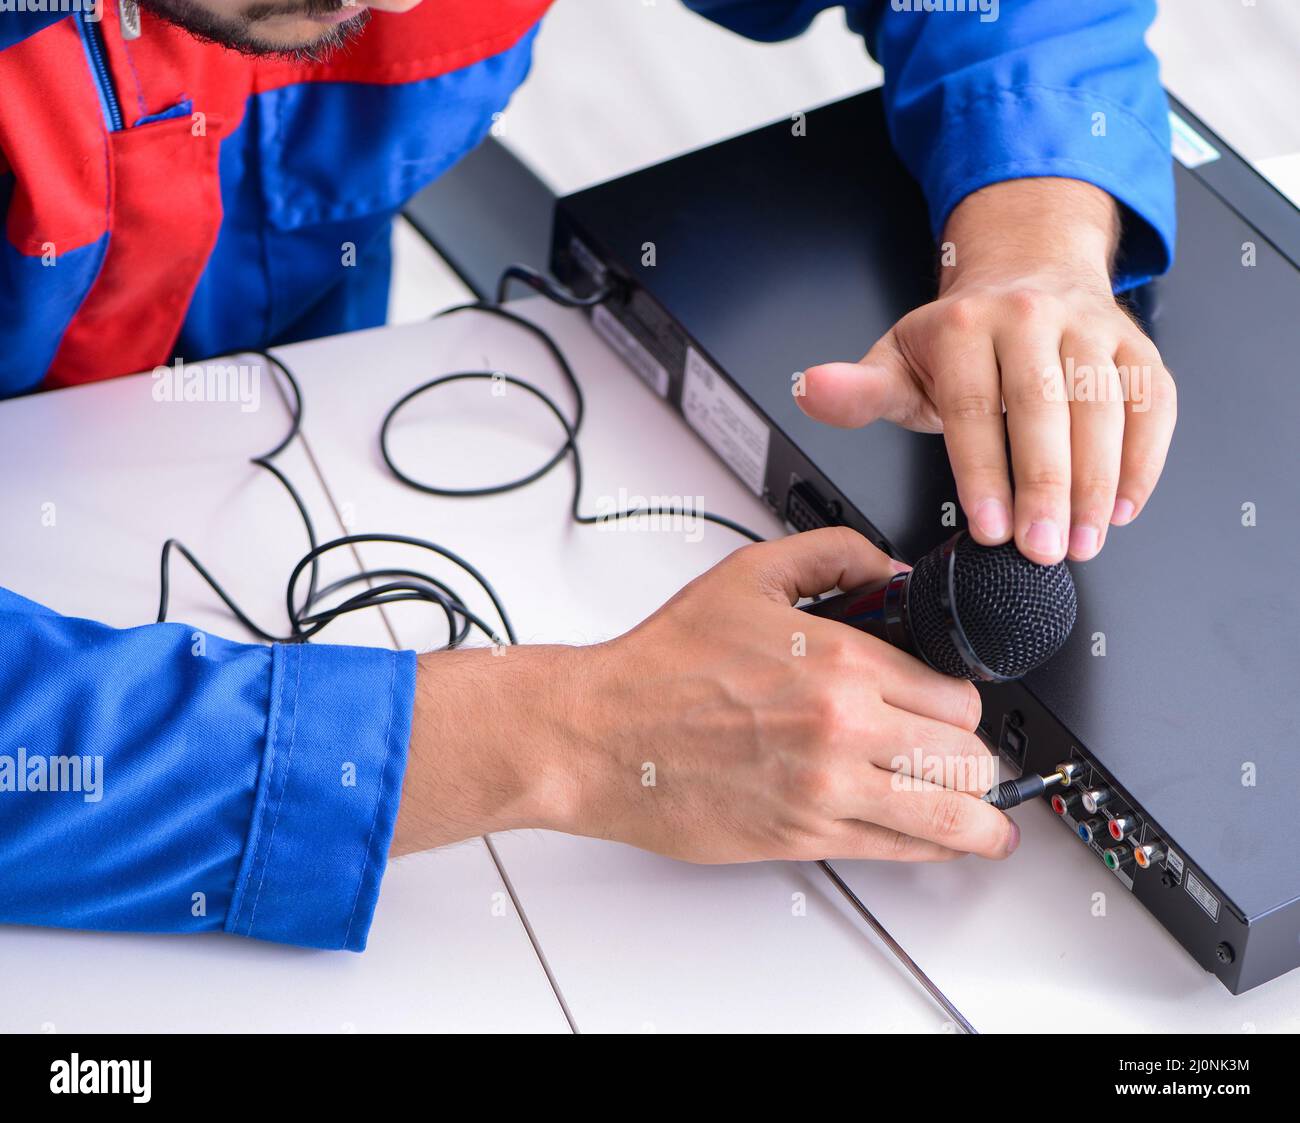 Man repairman repairing dvd player at service center Stock Photo